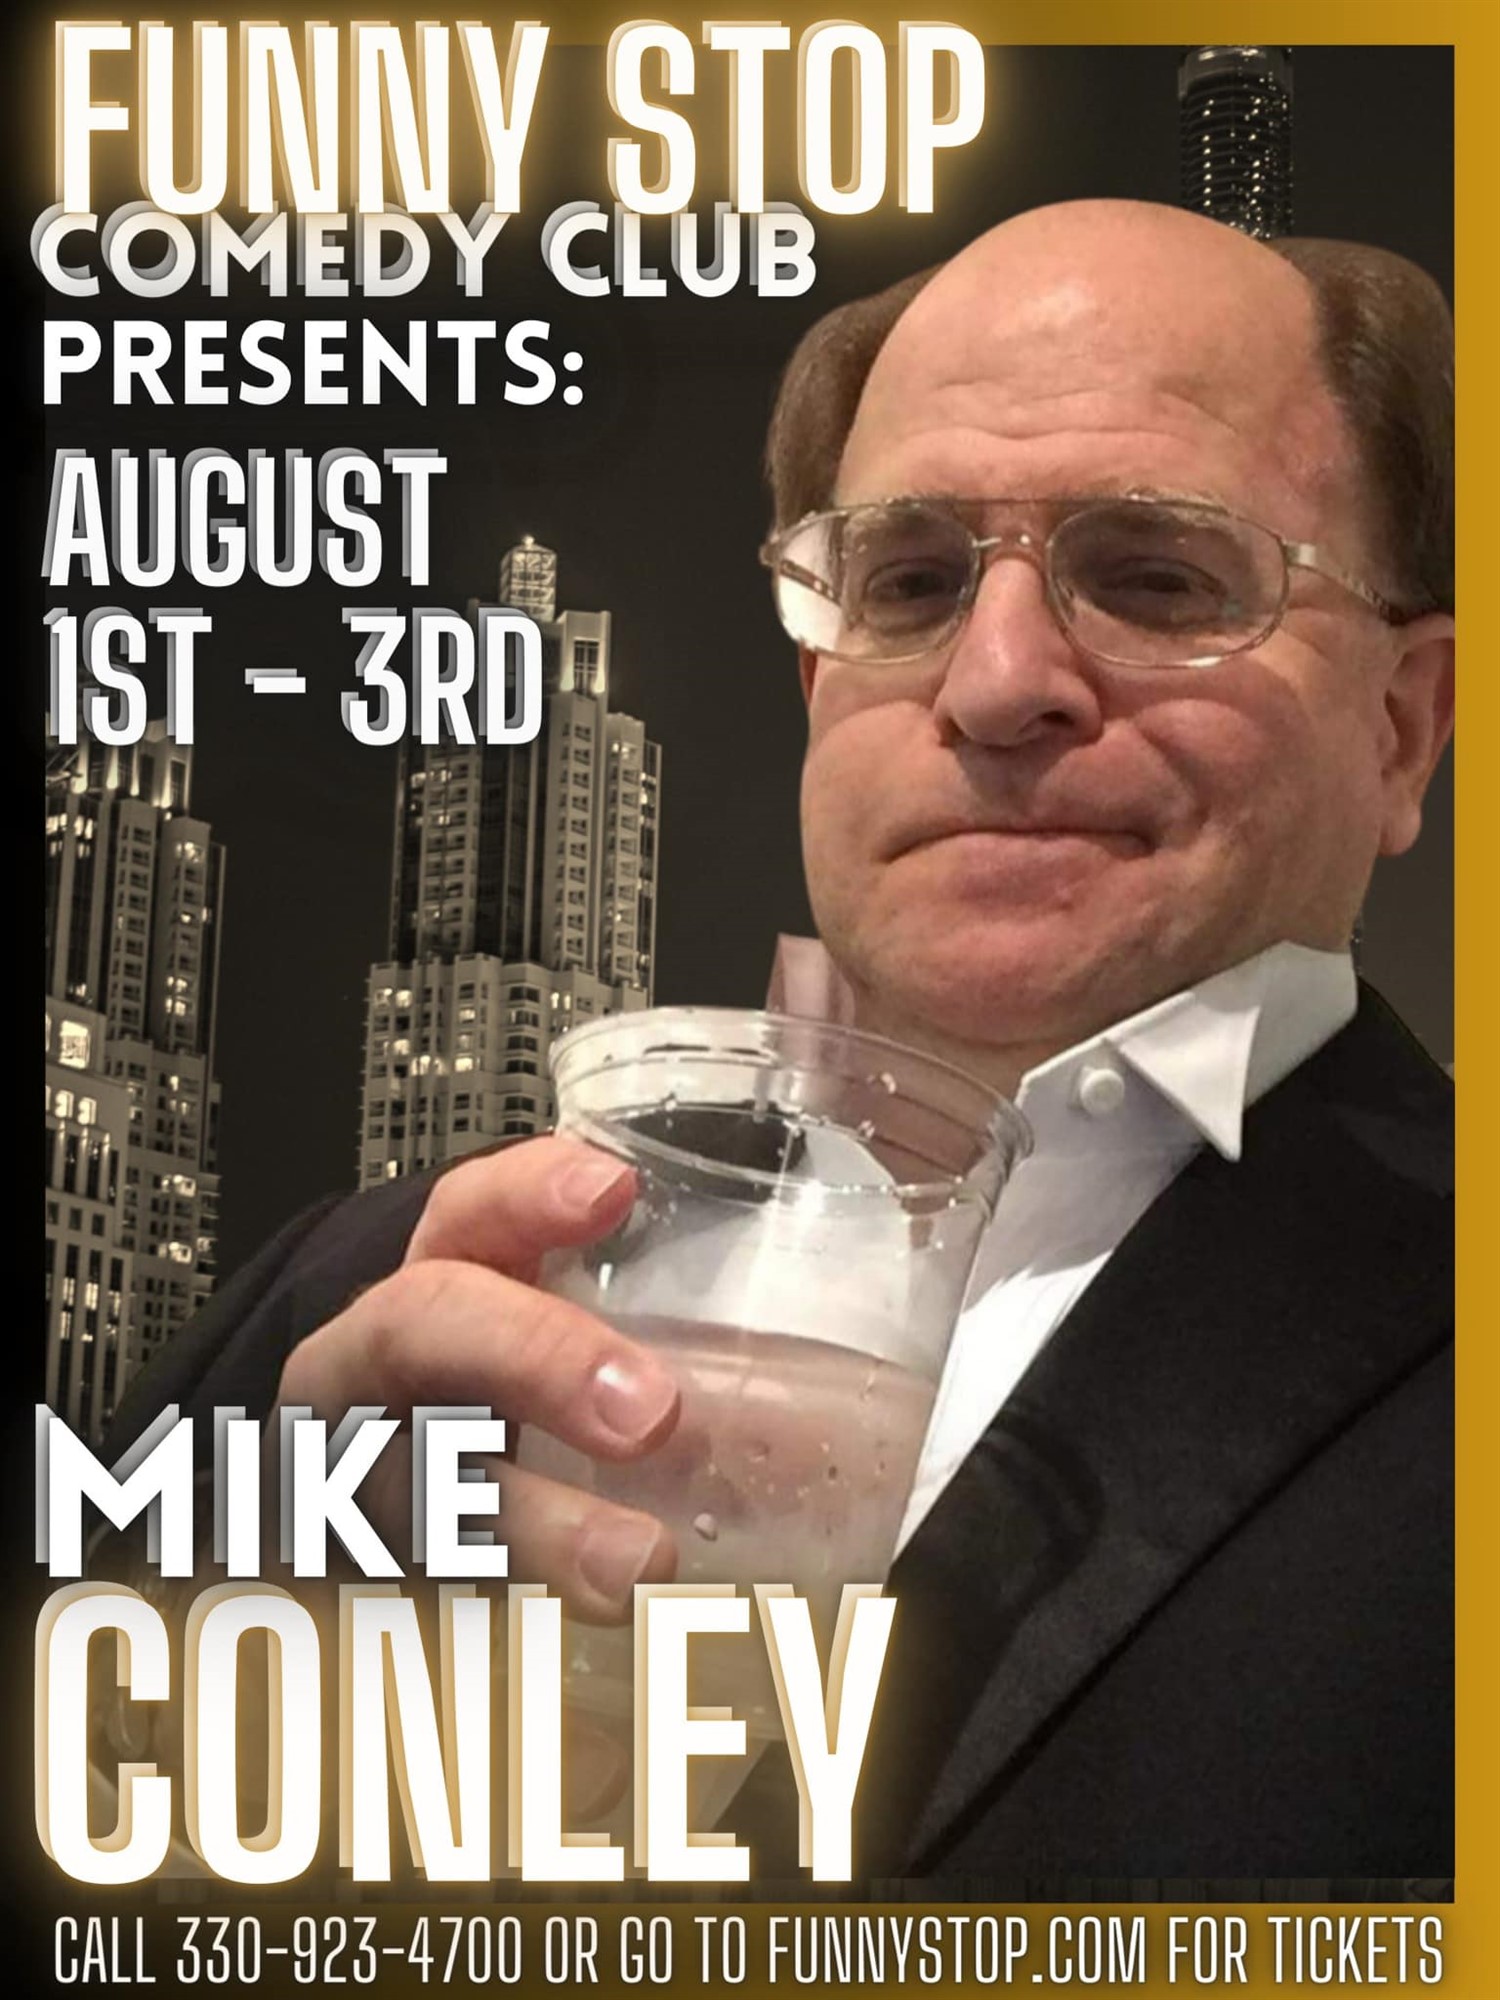 Mike Conley - Sat. 7:30 PM Show Funny Stop Comedy Club on ago. 03, 19:30@Funny Stop Comedy Club - Compra entradas y obtén información enFunny Stop funnystop.online